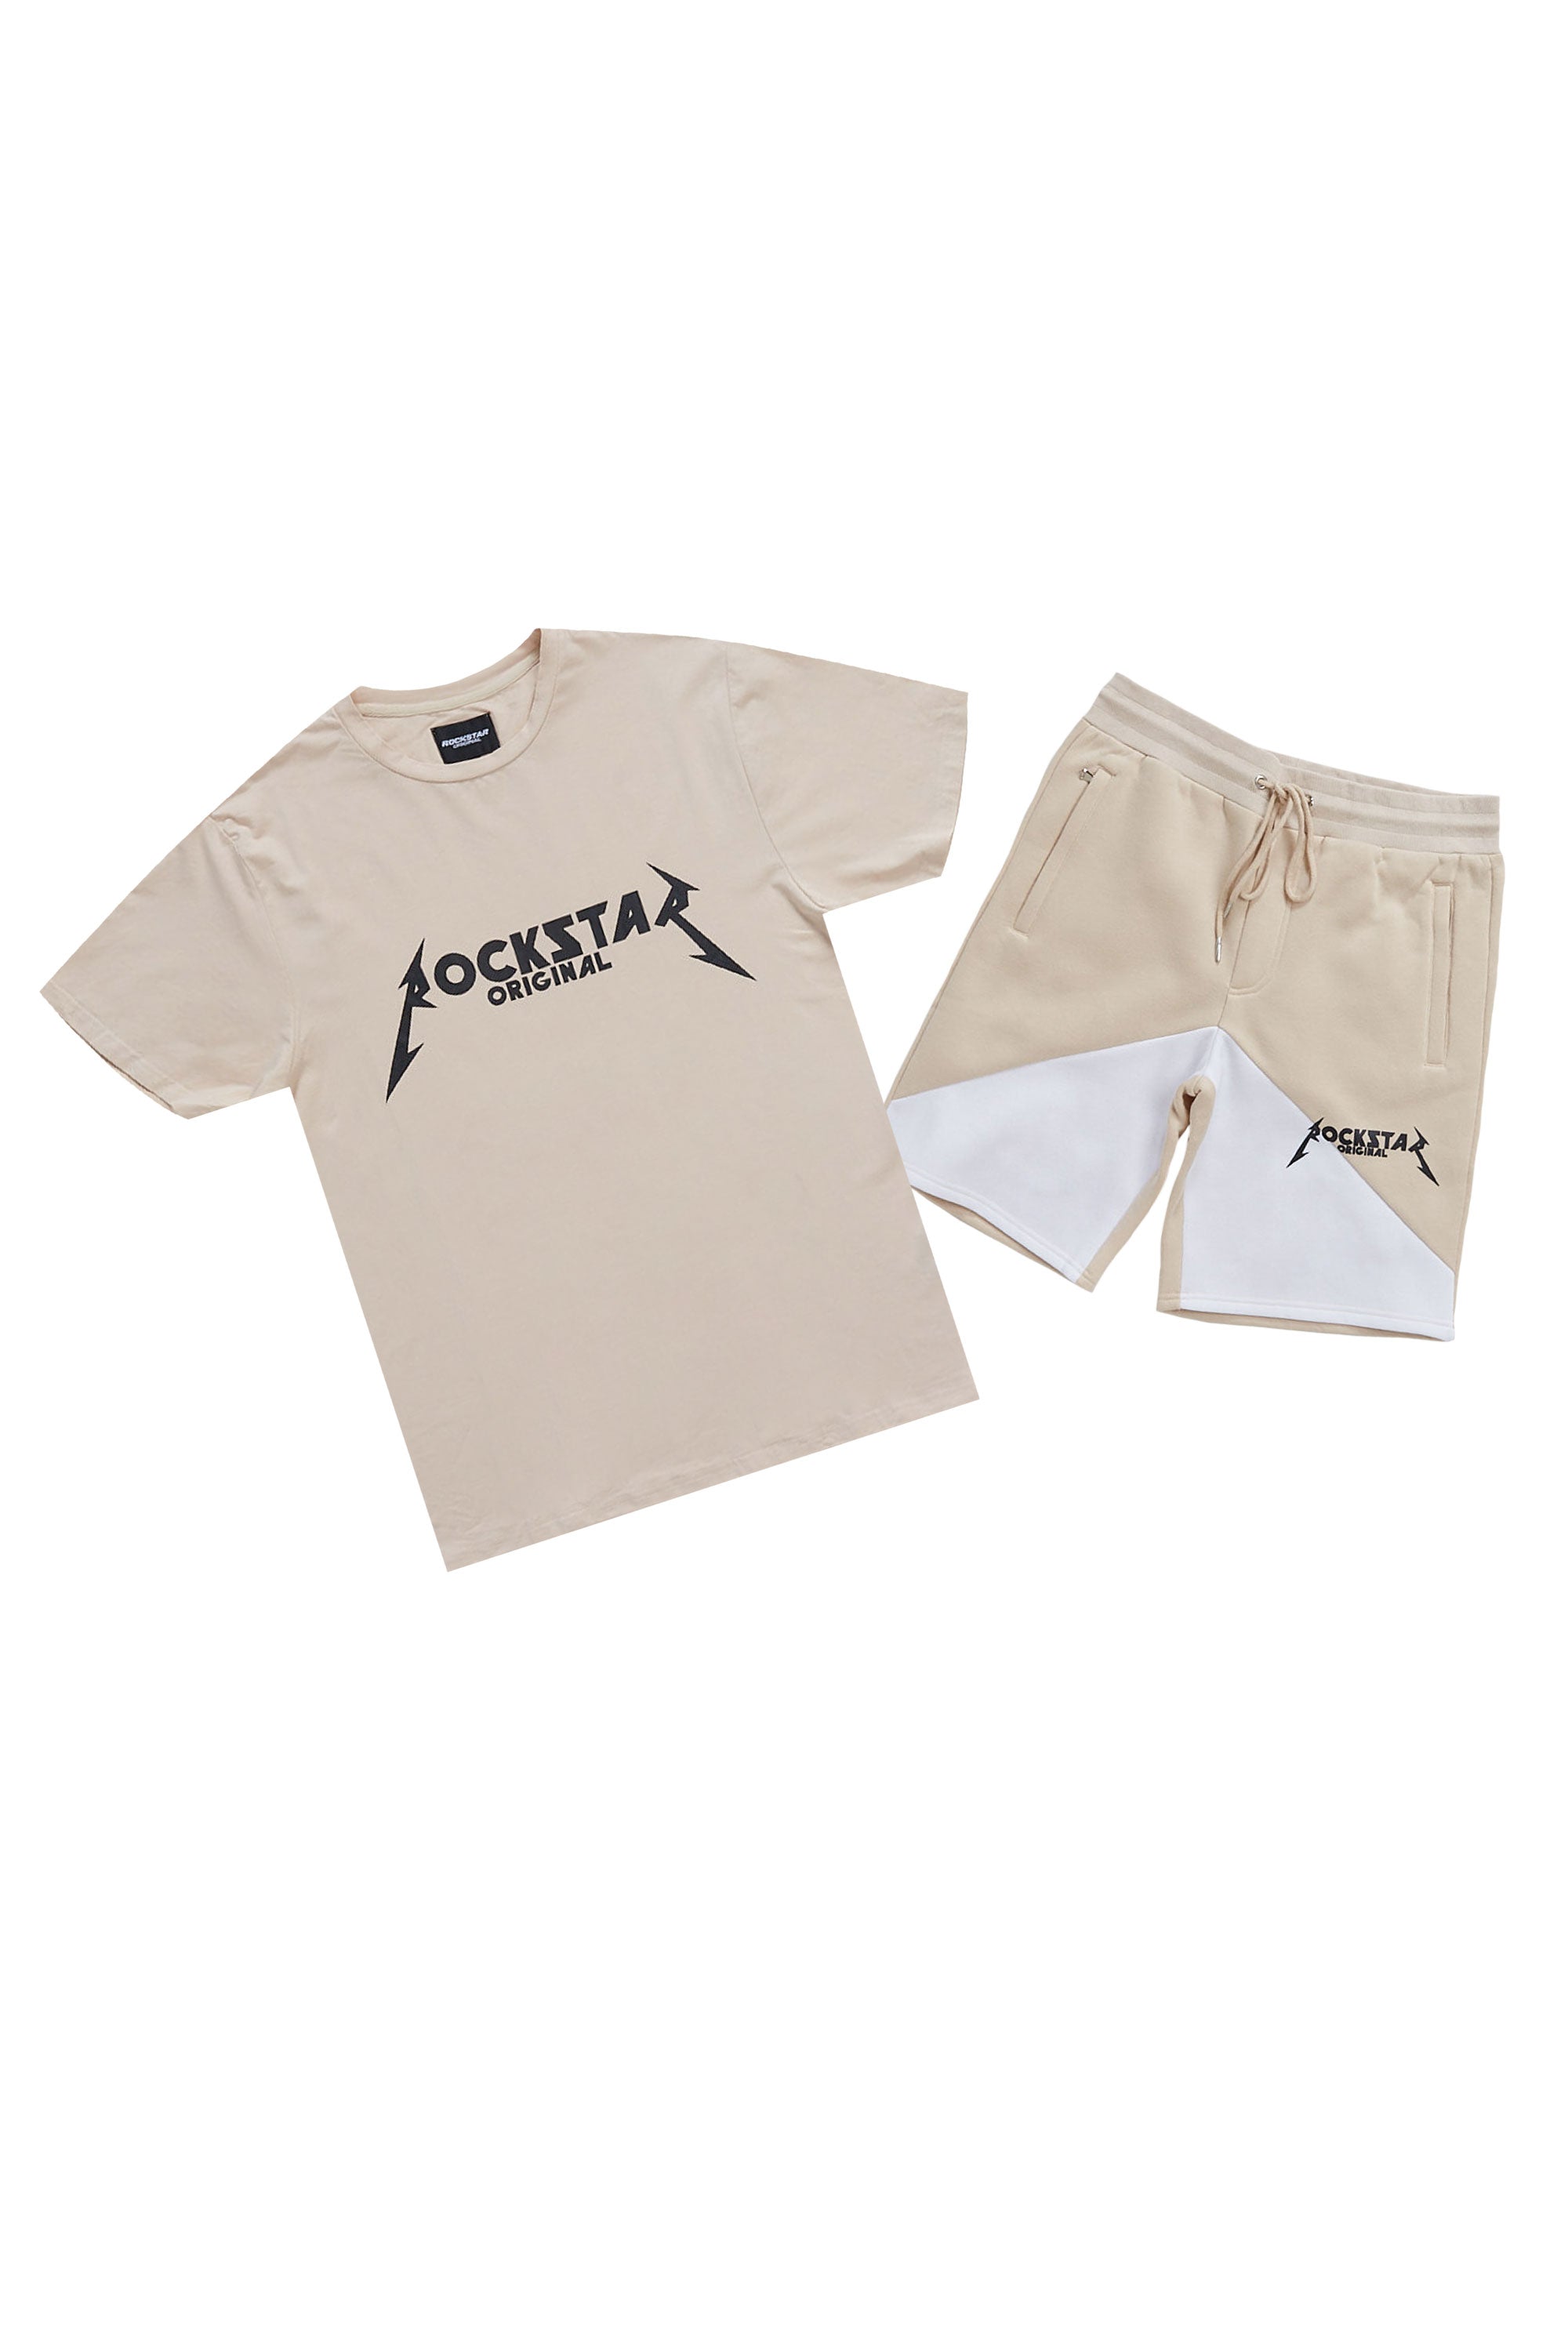 Men\'s Shirt and Short Set: Matching Two Piece Shirts and Shorts